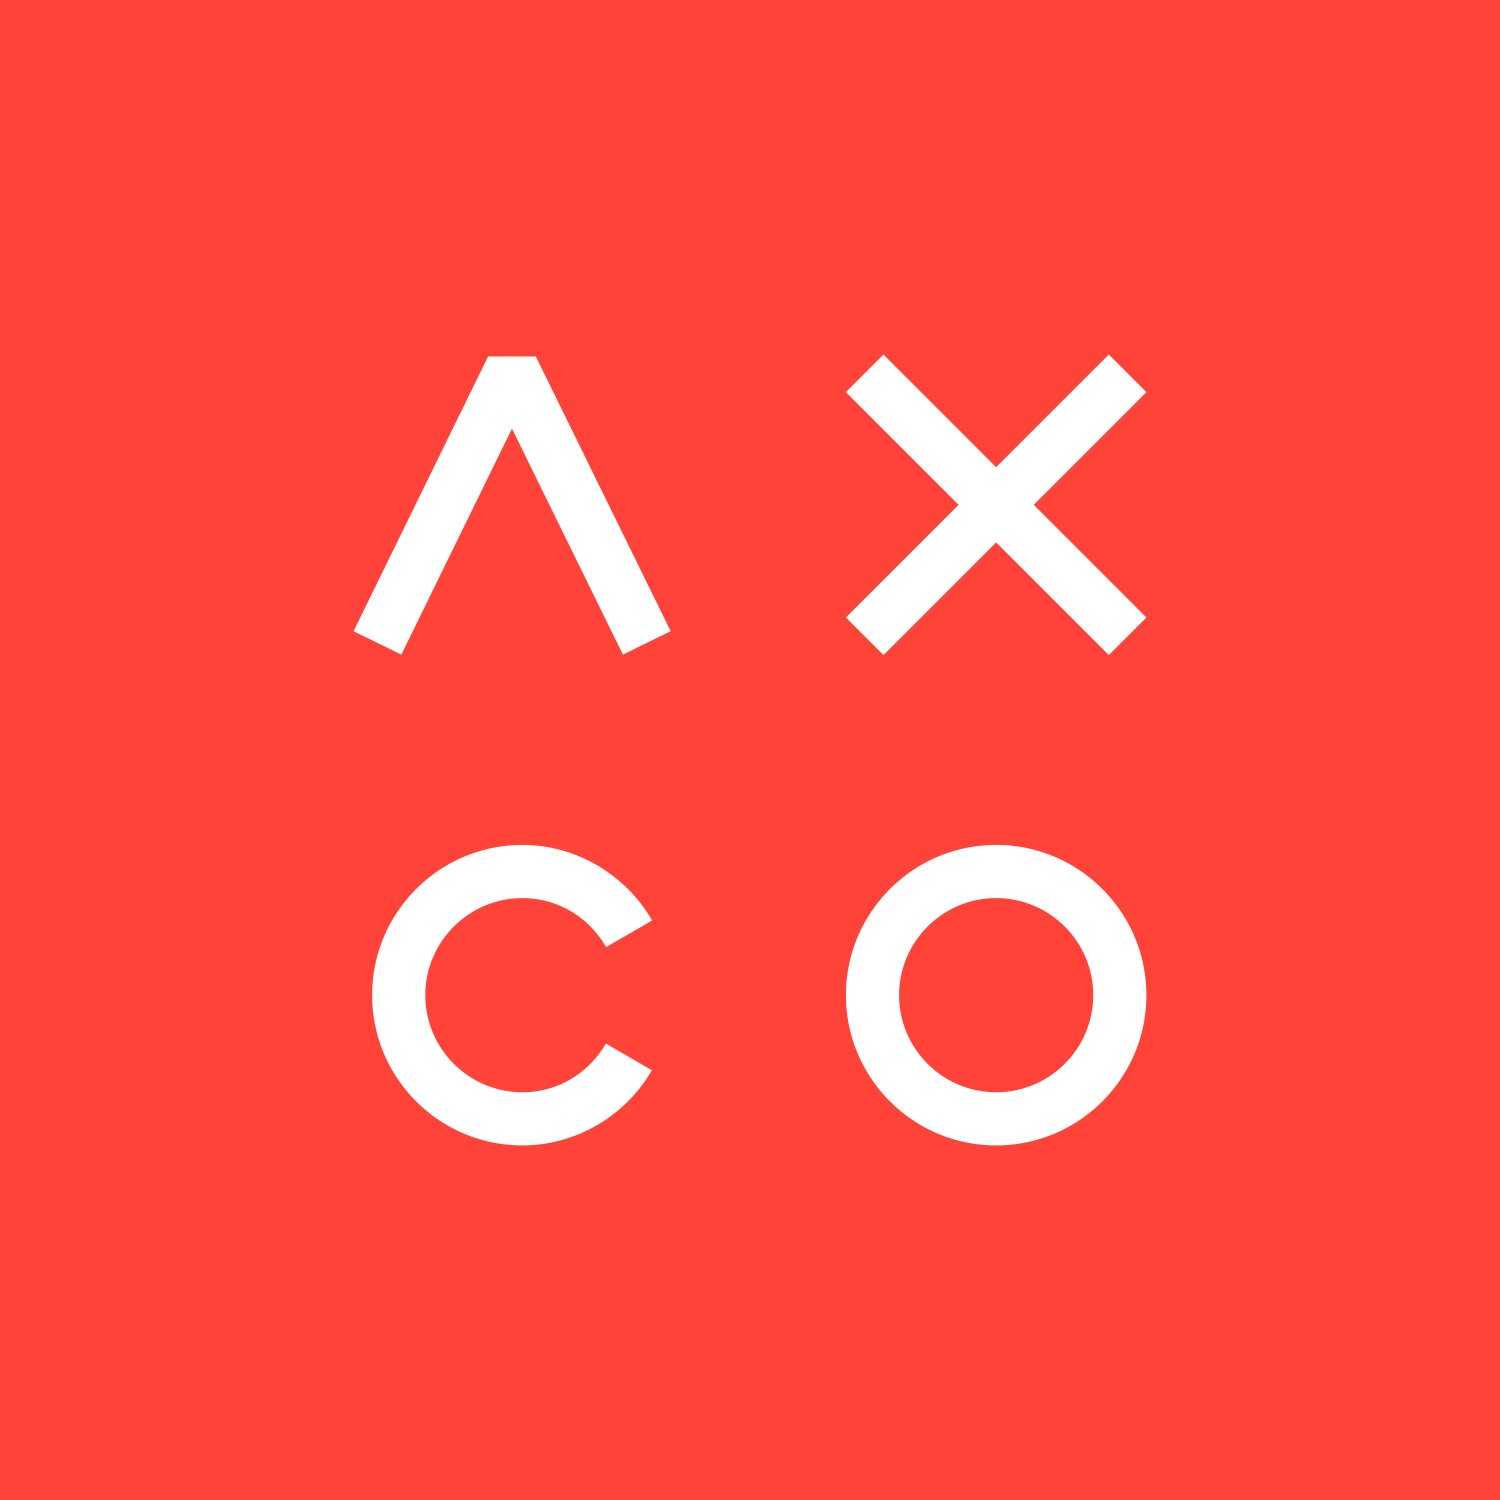 (c) Axcoinfo.com